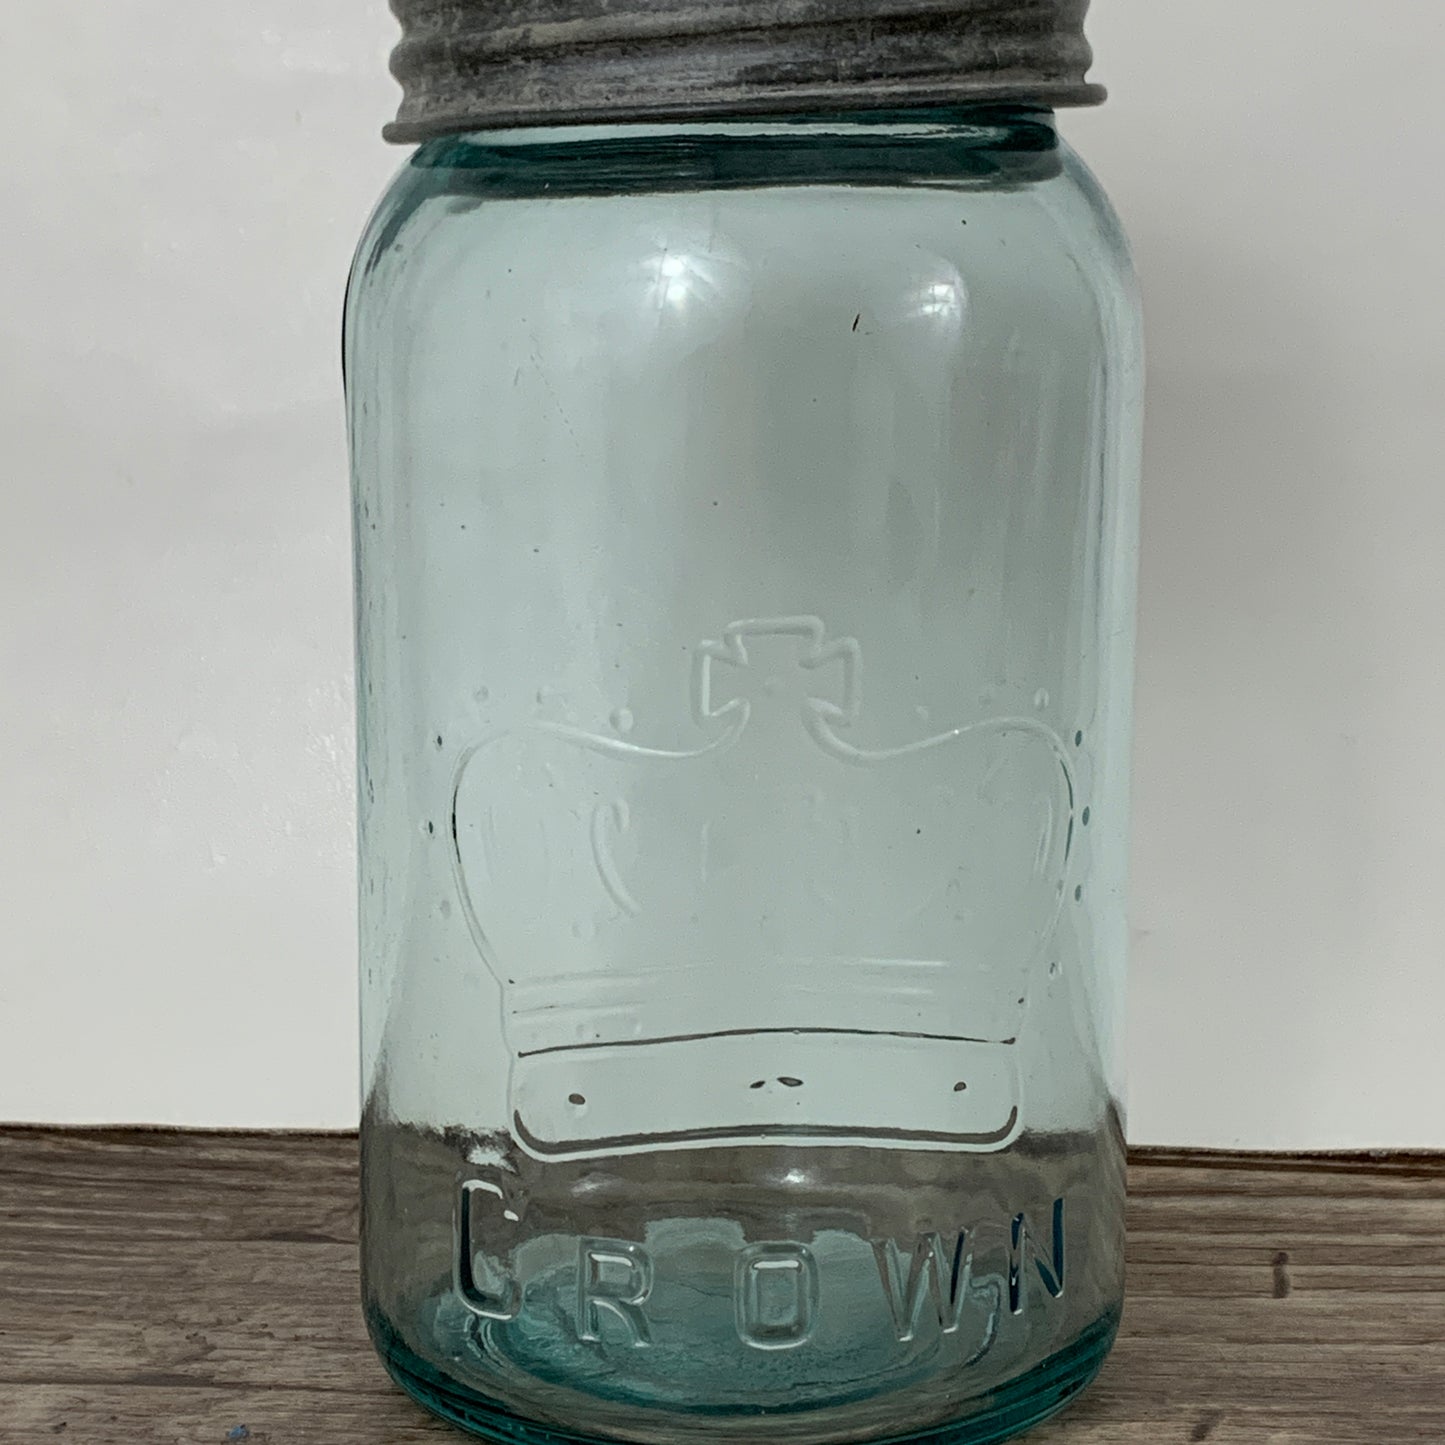 Aqua Crown Quart Size Jar 7" tall with Zinc Ring, Dry Storage, Stash Jar, Antique Farmhouse